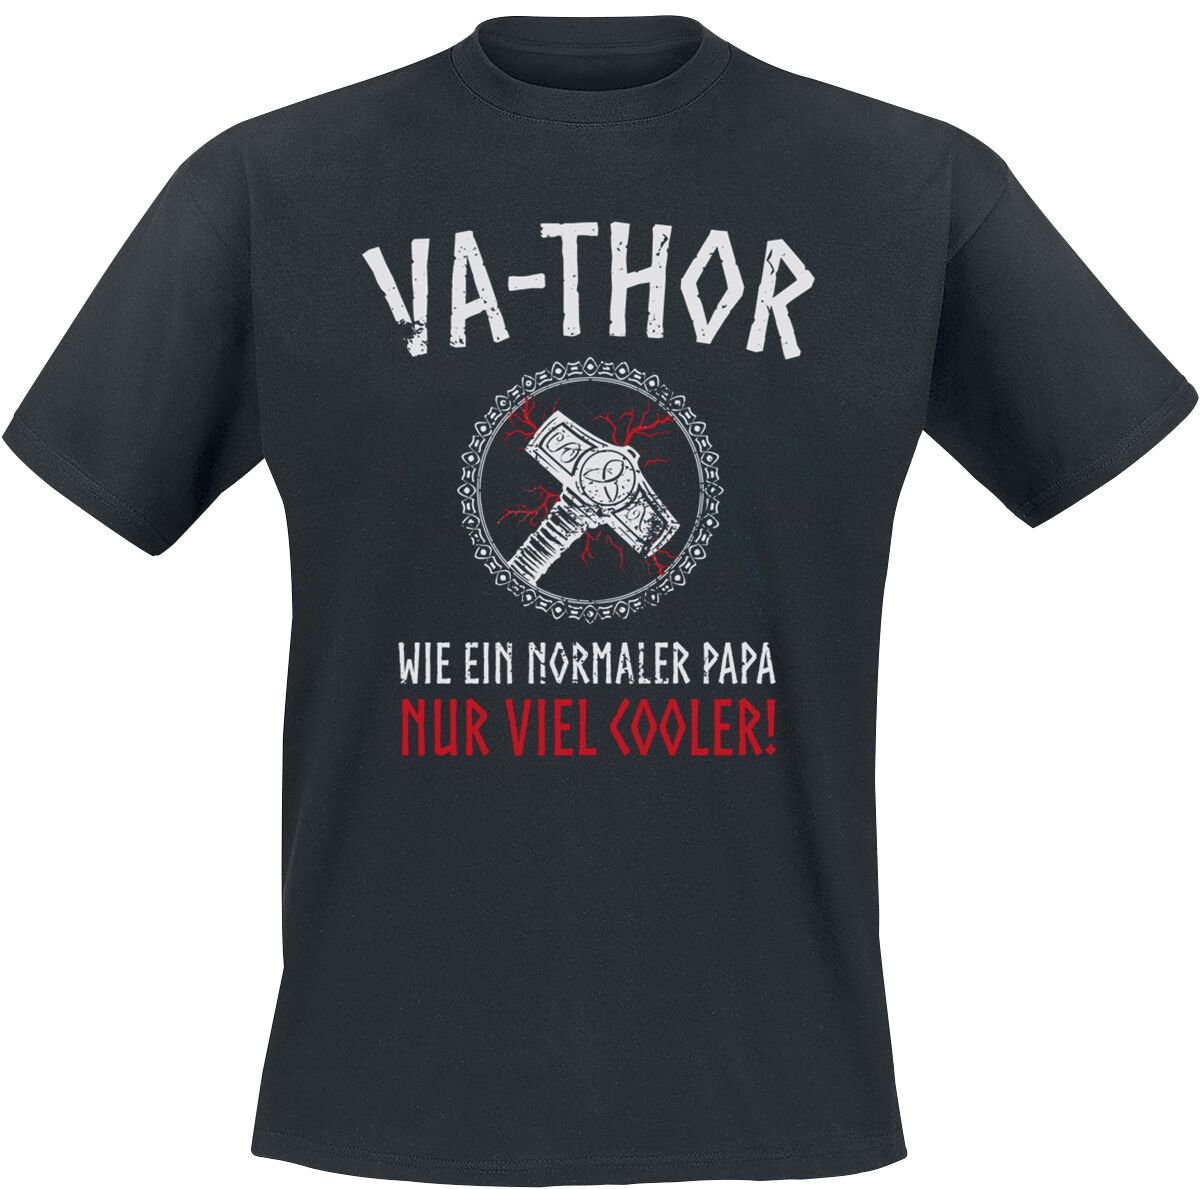 Familie & Freunde Va-Thor T-Shirt schwarz in 3XL